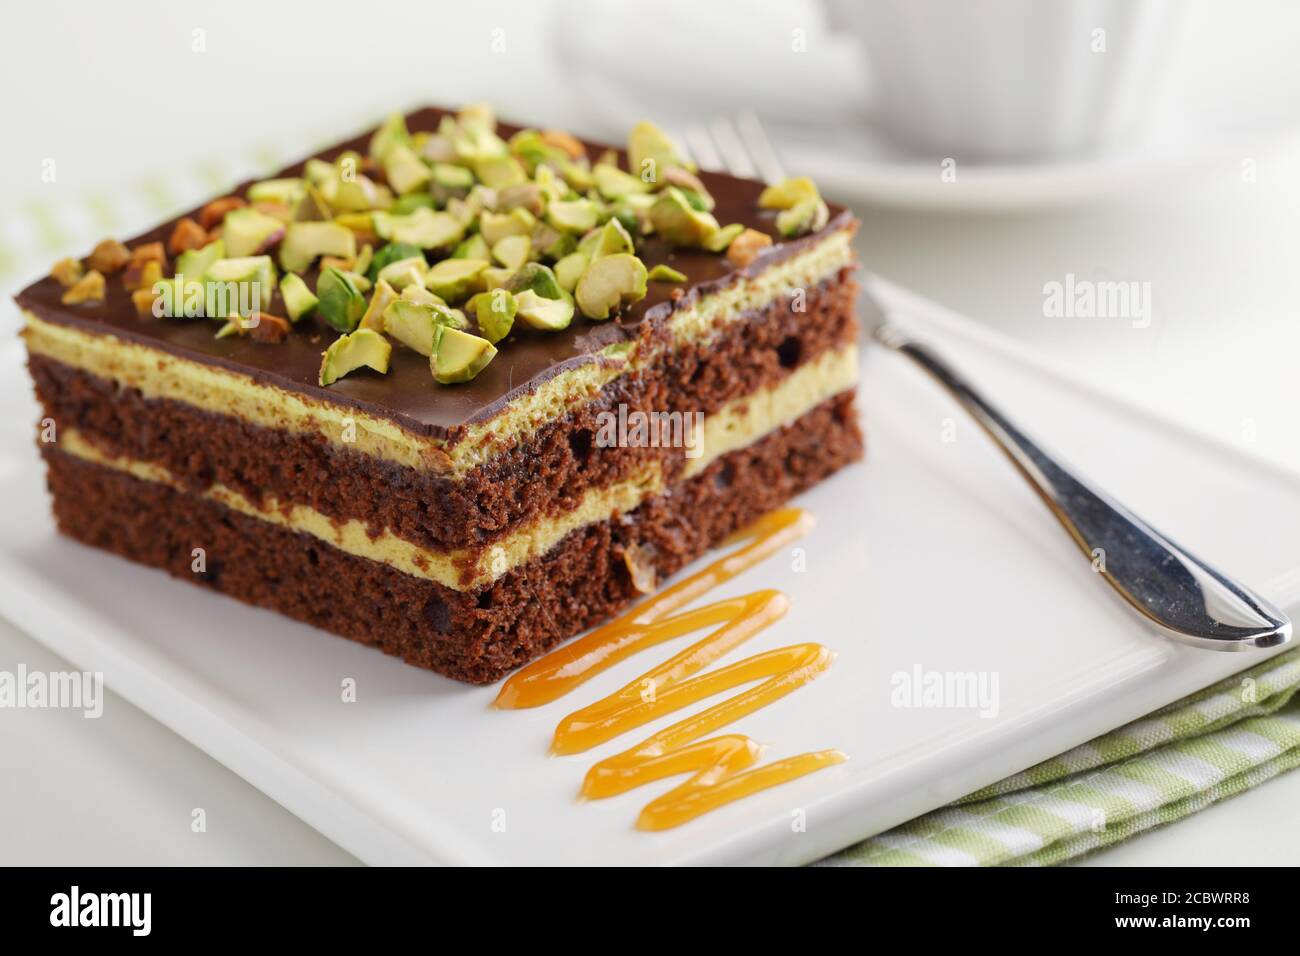 Chocolate cake with Pistachio nuts closeup Stock Photo